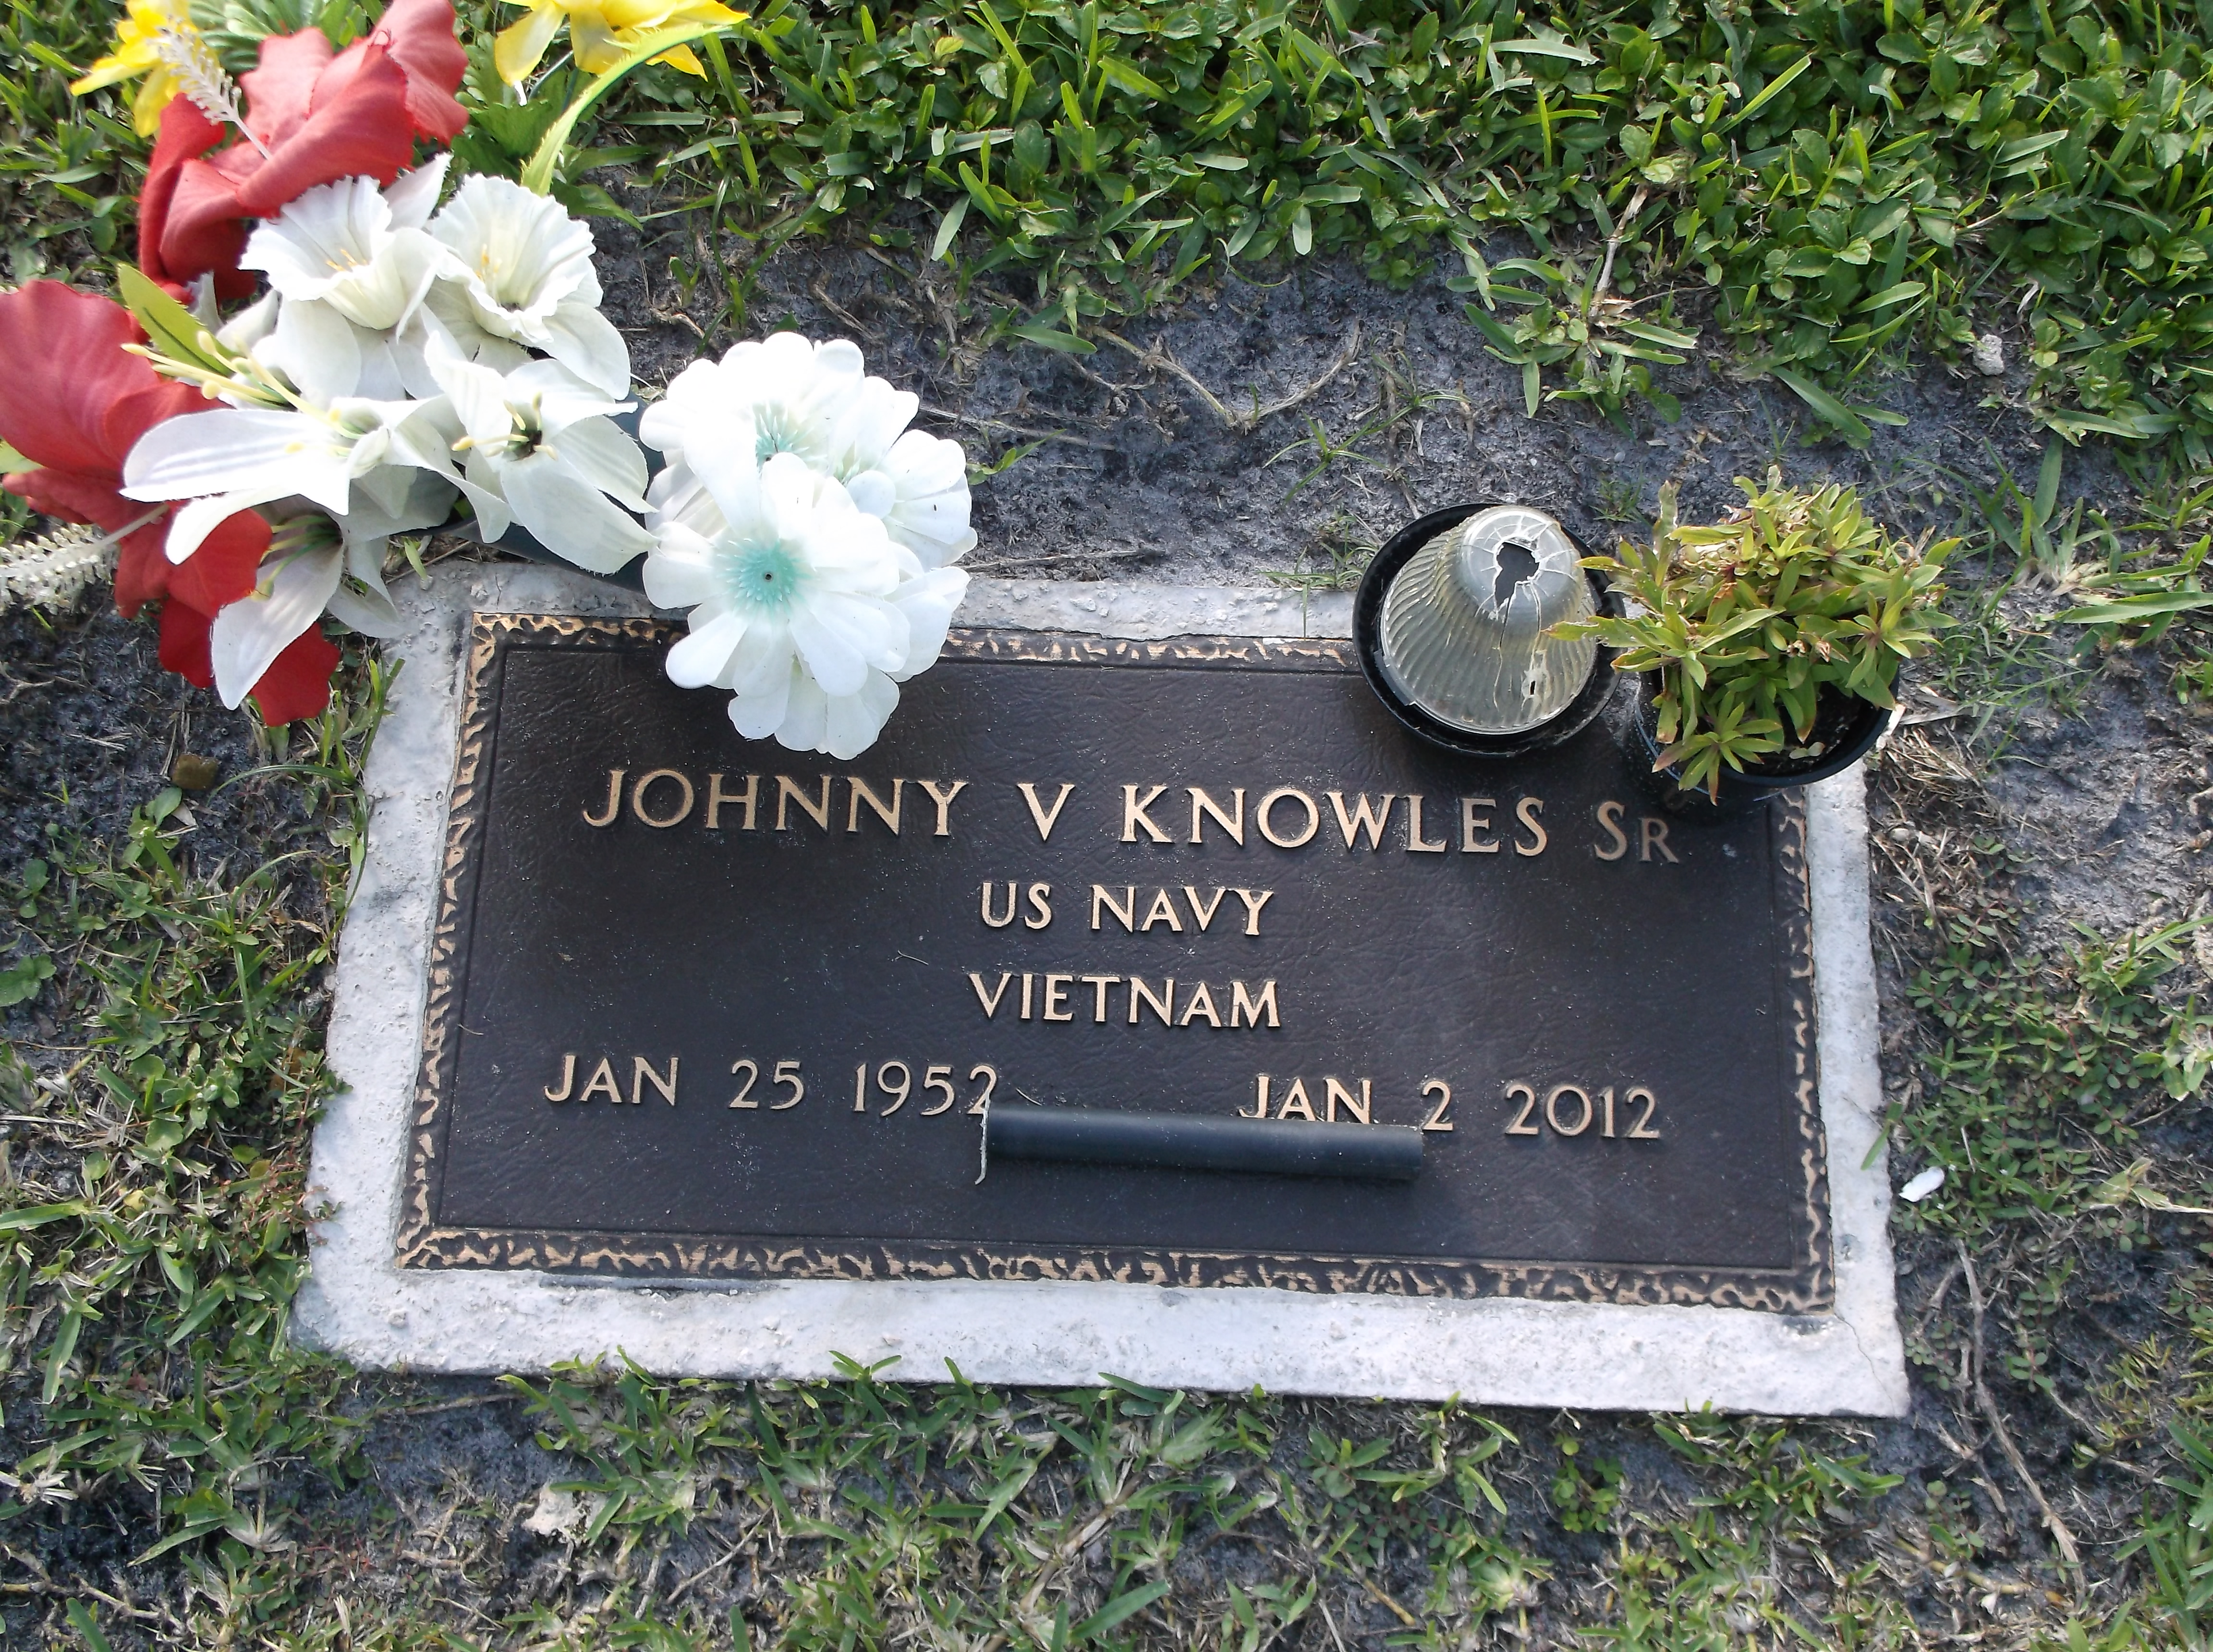 Johnny V Knowles, Sr